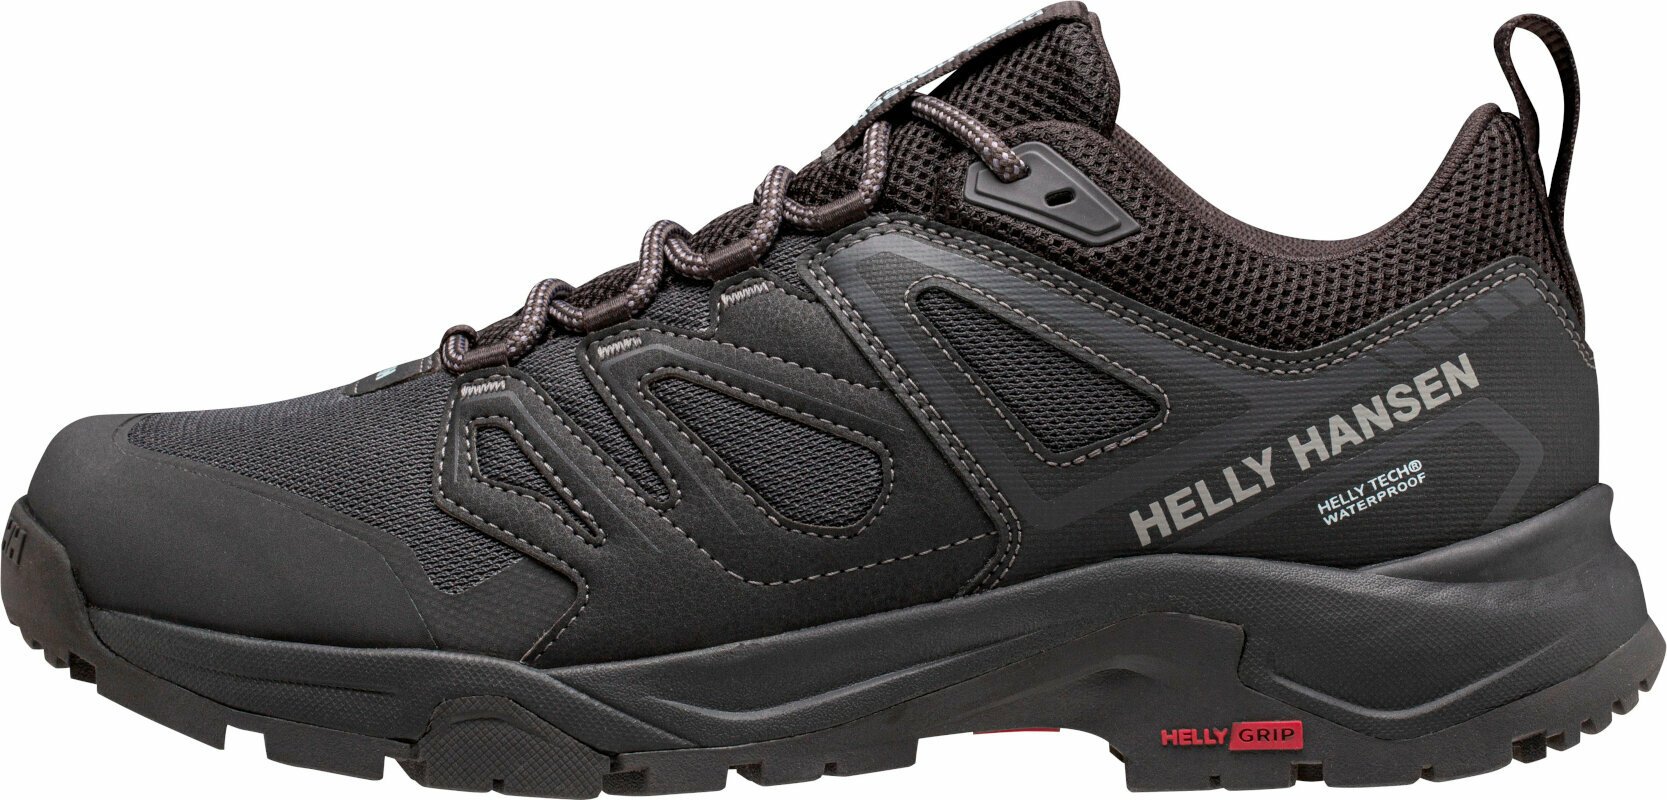 Zapatillas De Senderismo Stalheim Hellytech® Impermeables Para Hombre